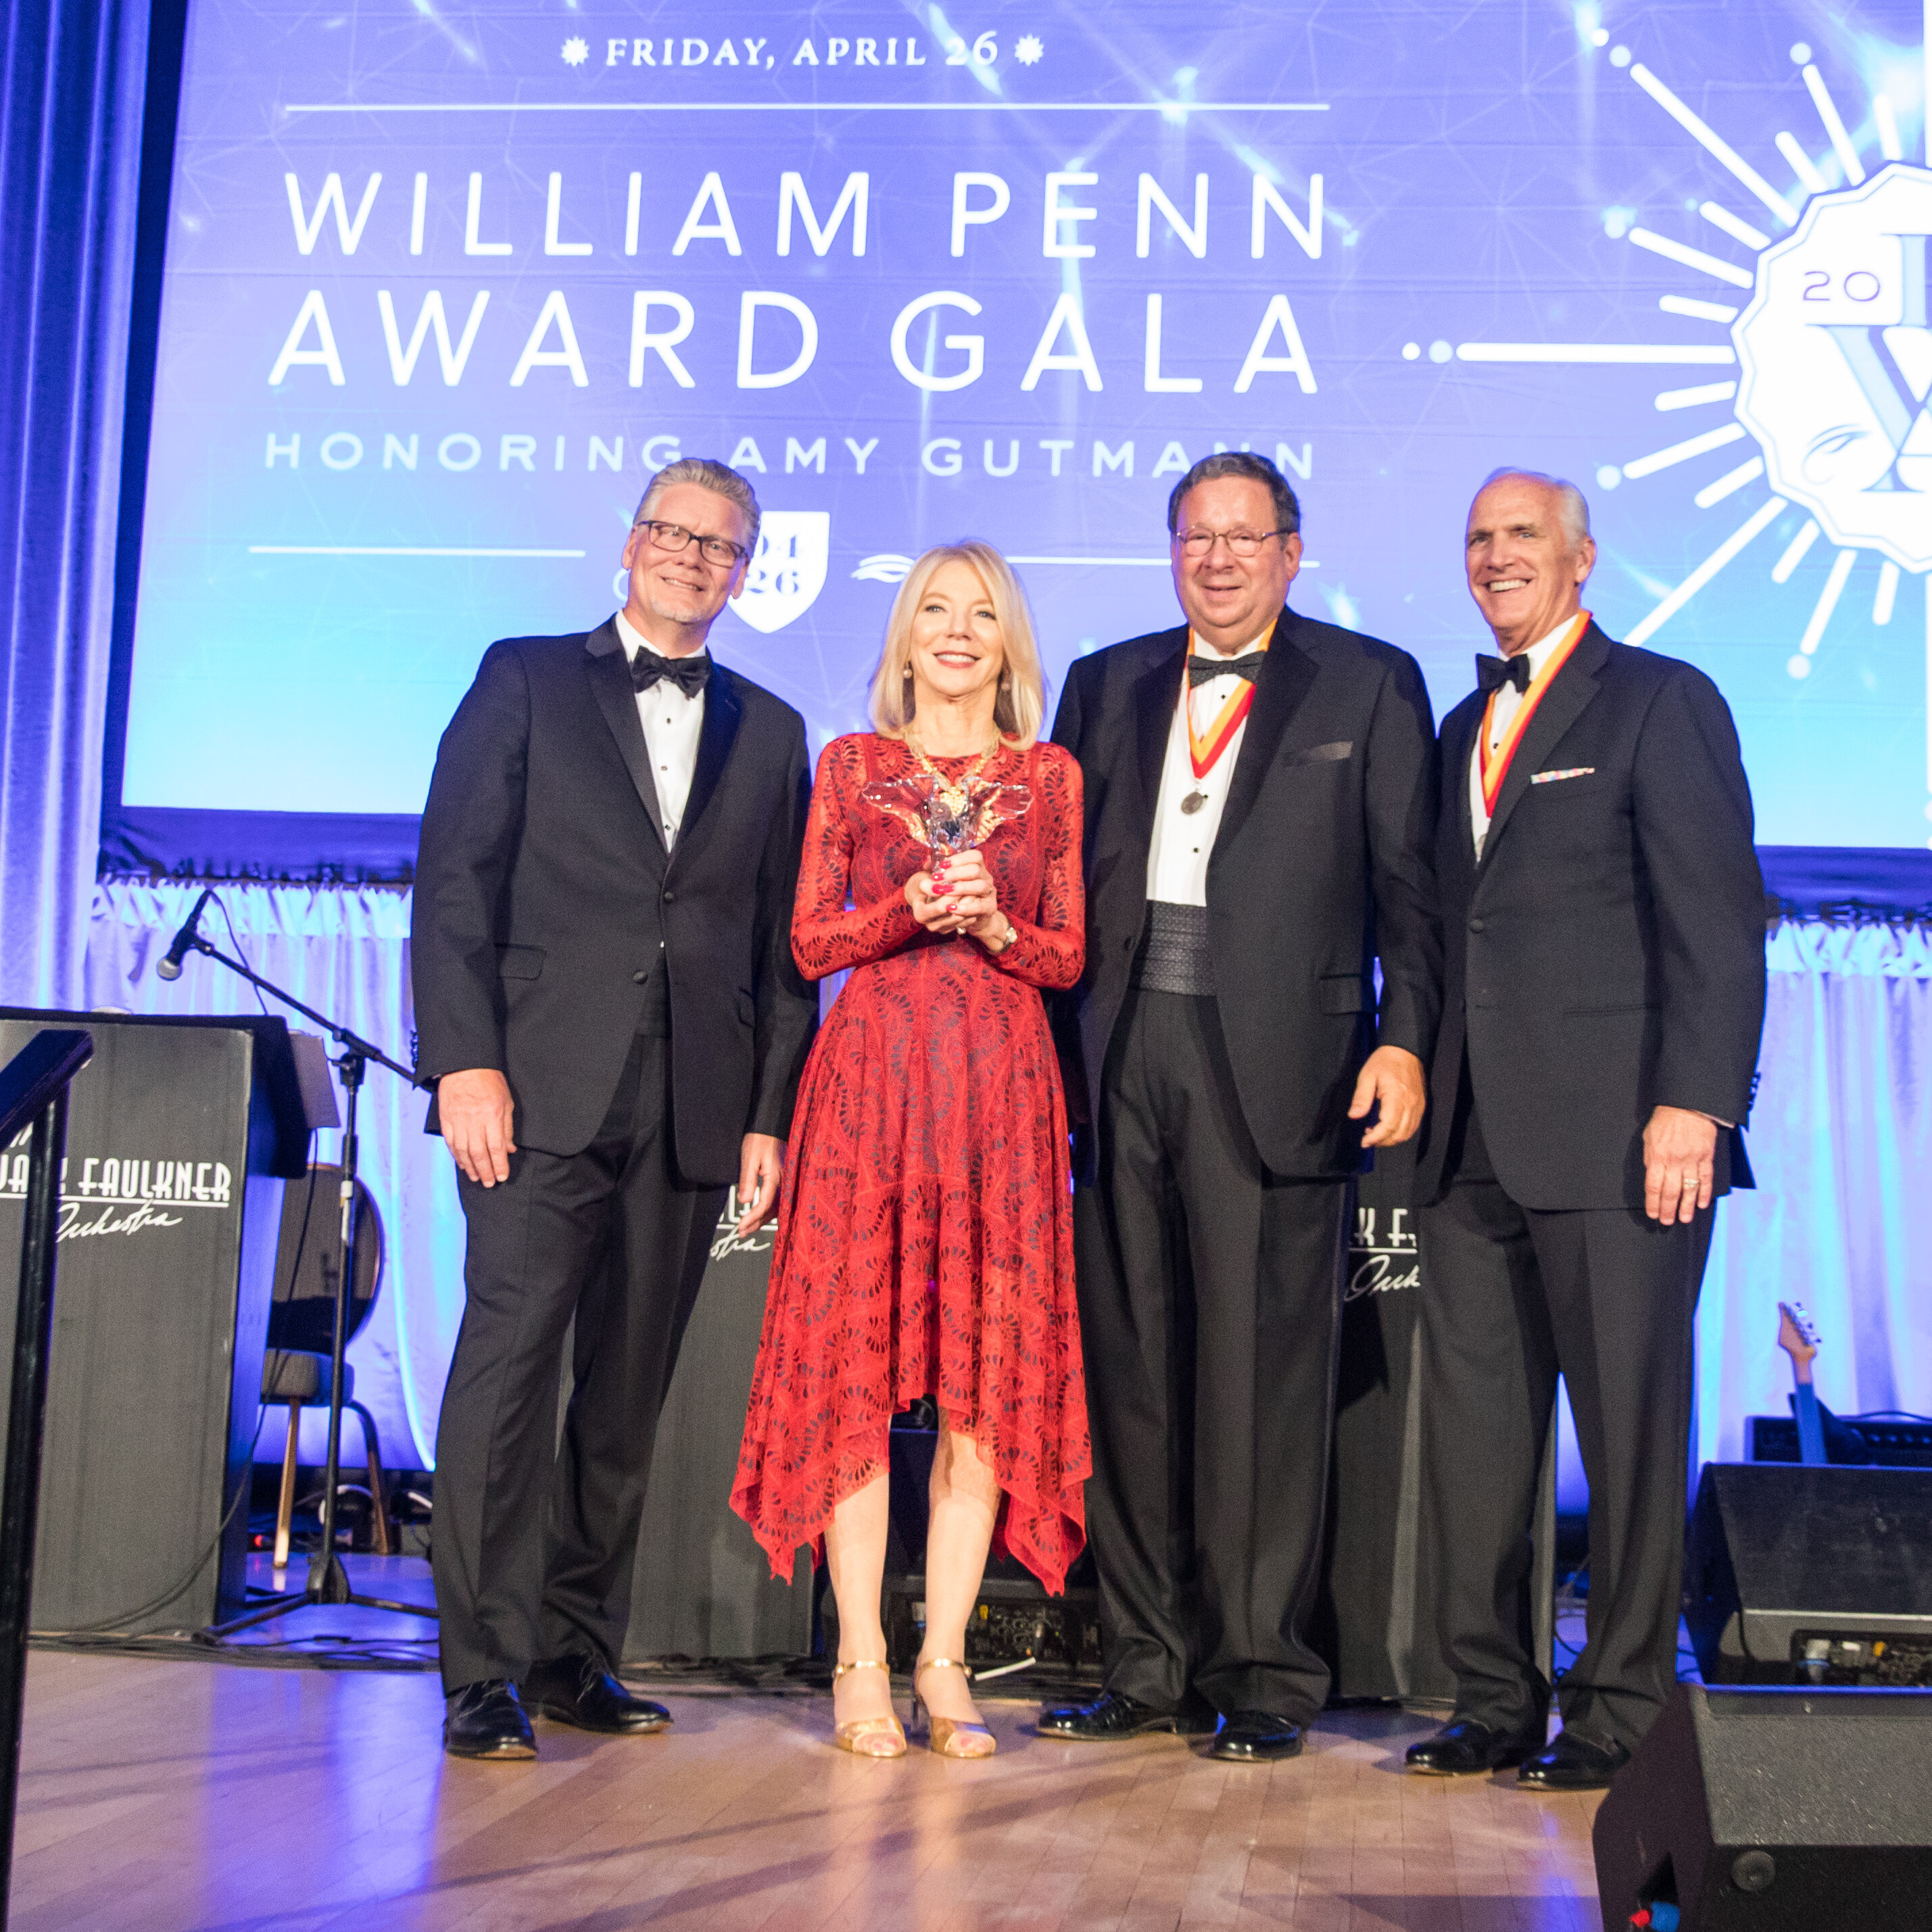 William Penn Award